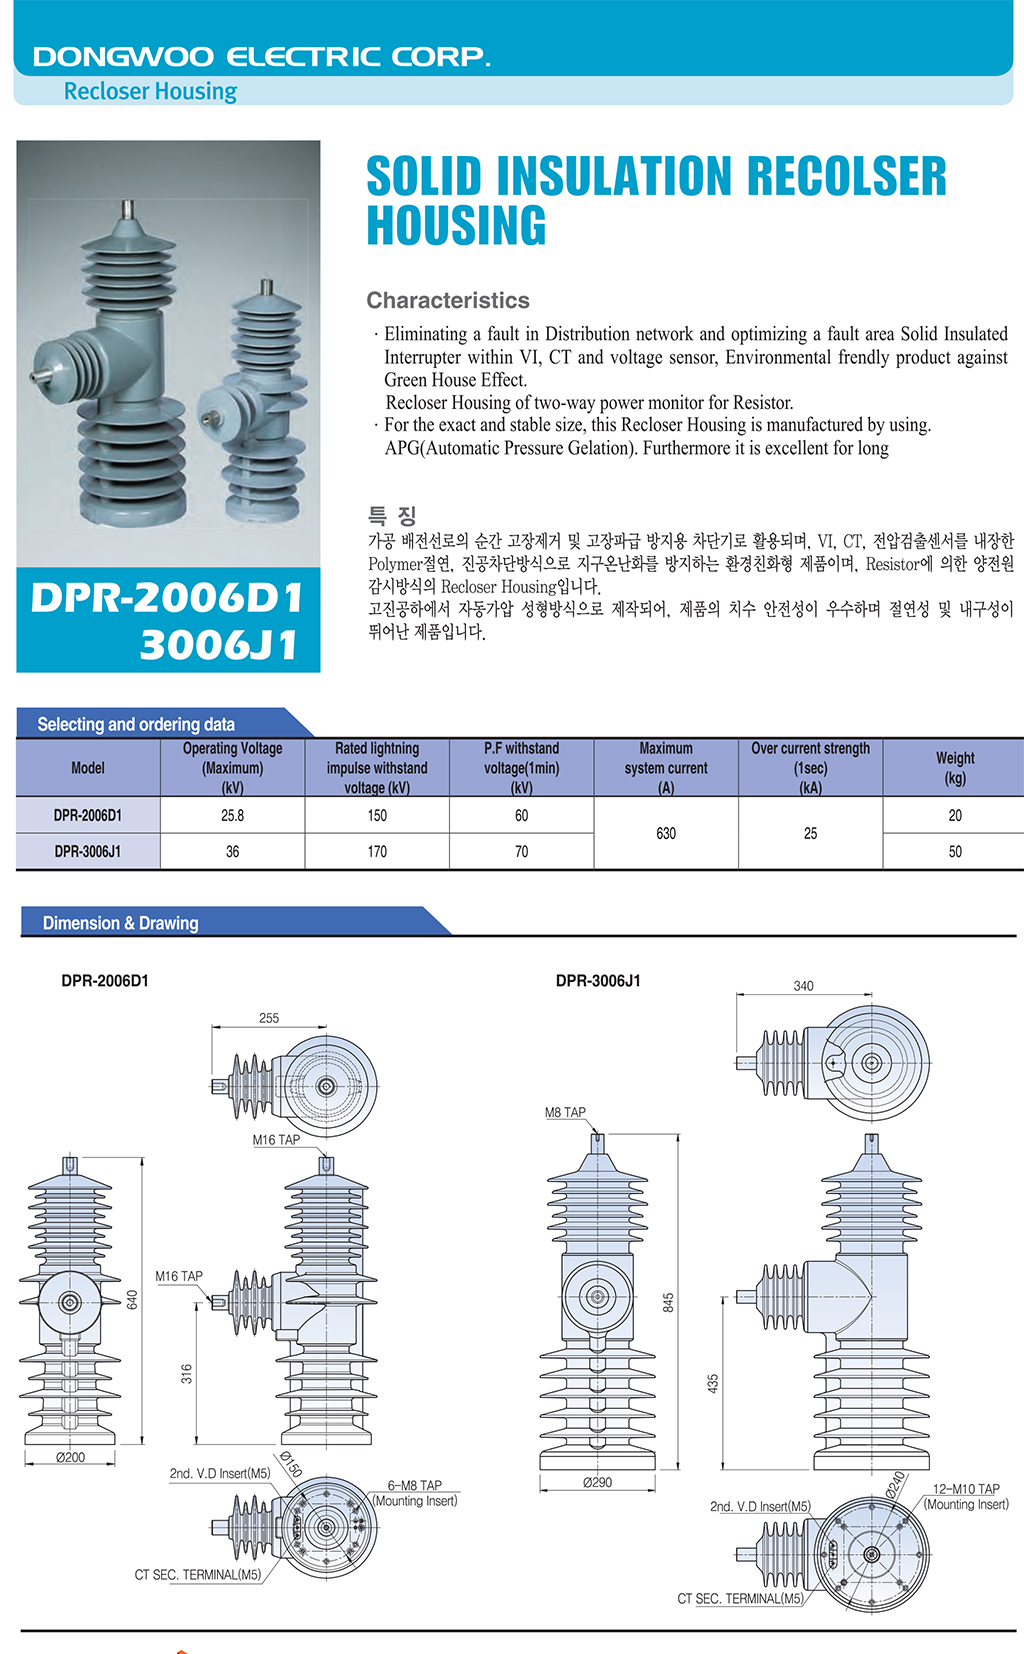 396-DPR-2006D1,3006J1.jpg